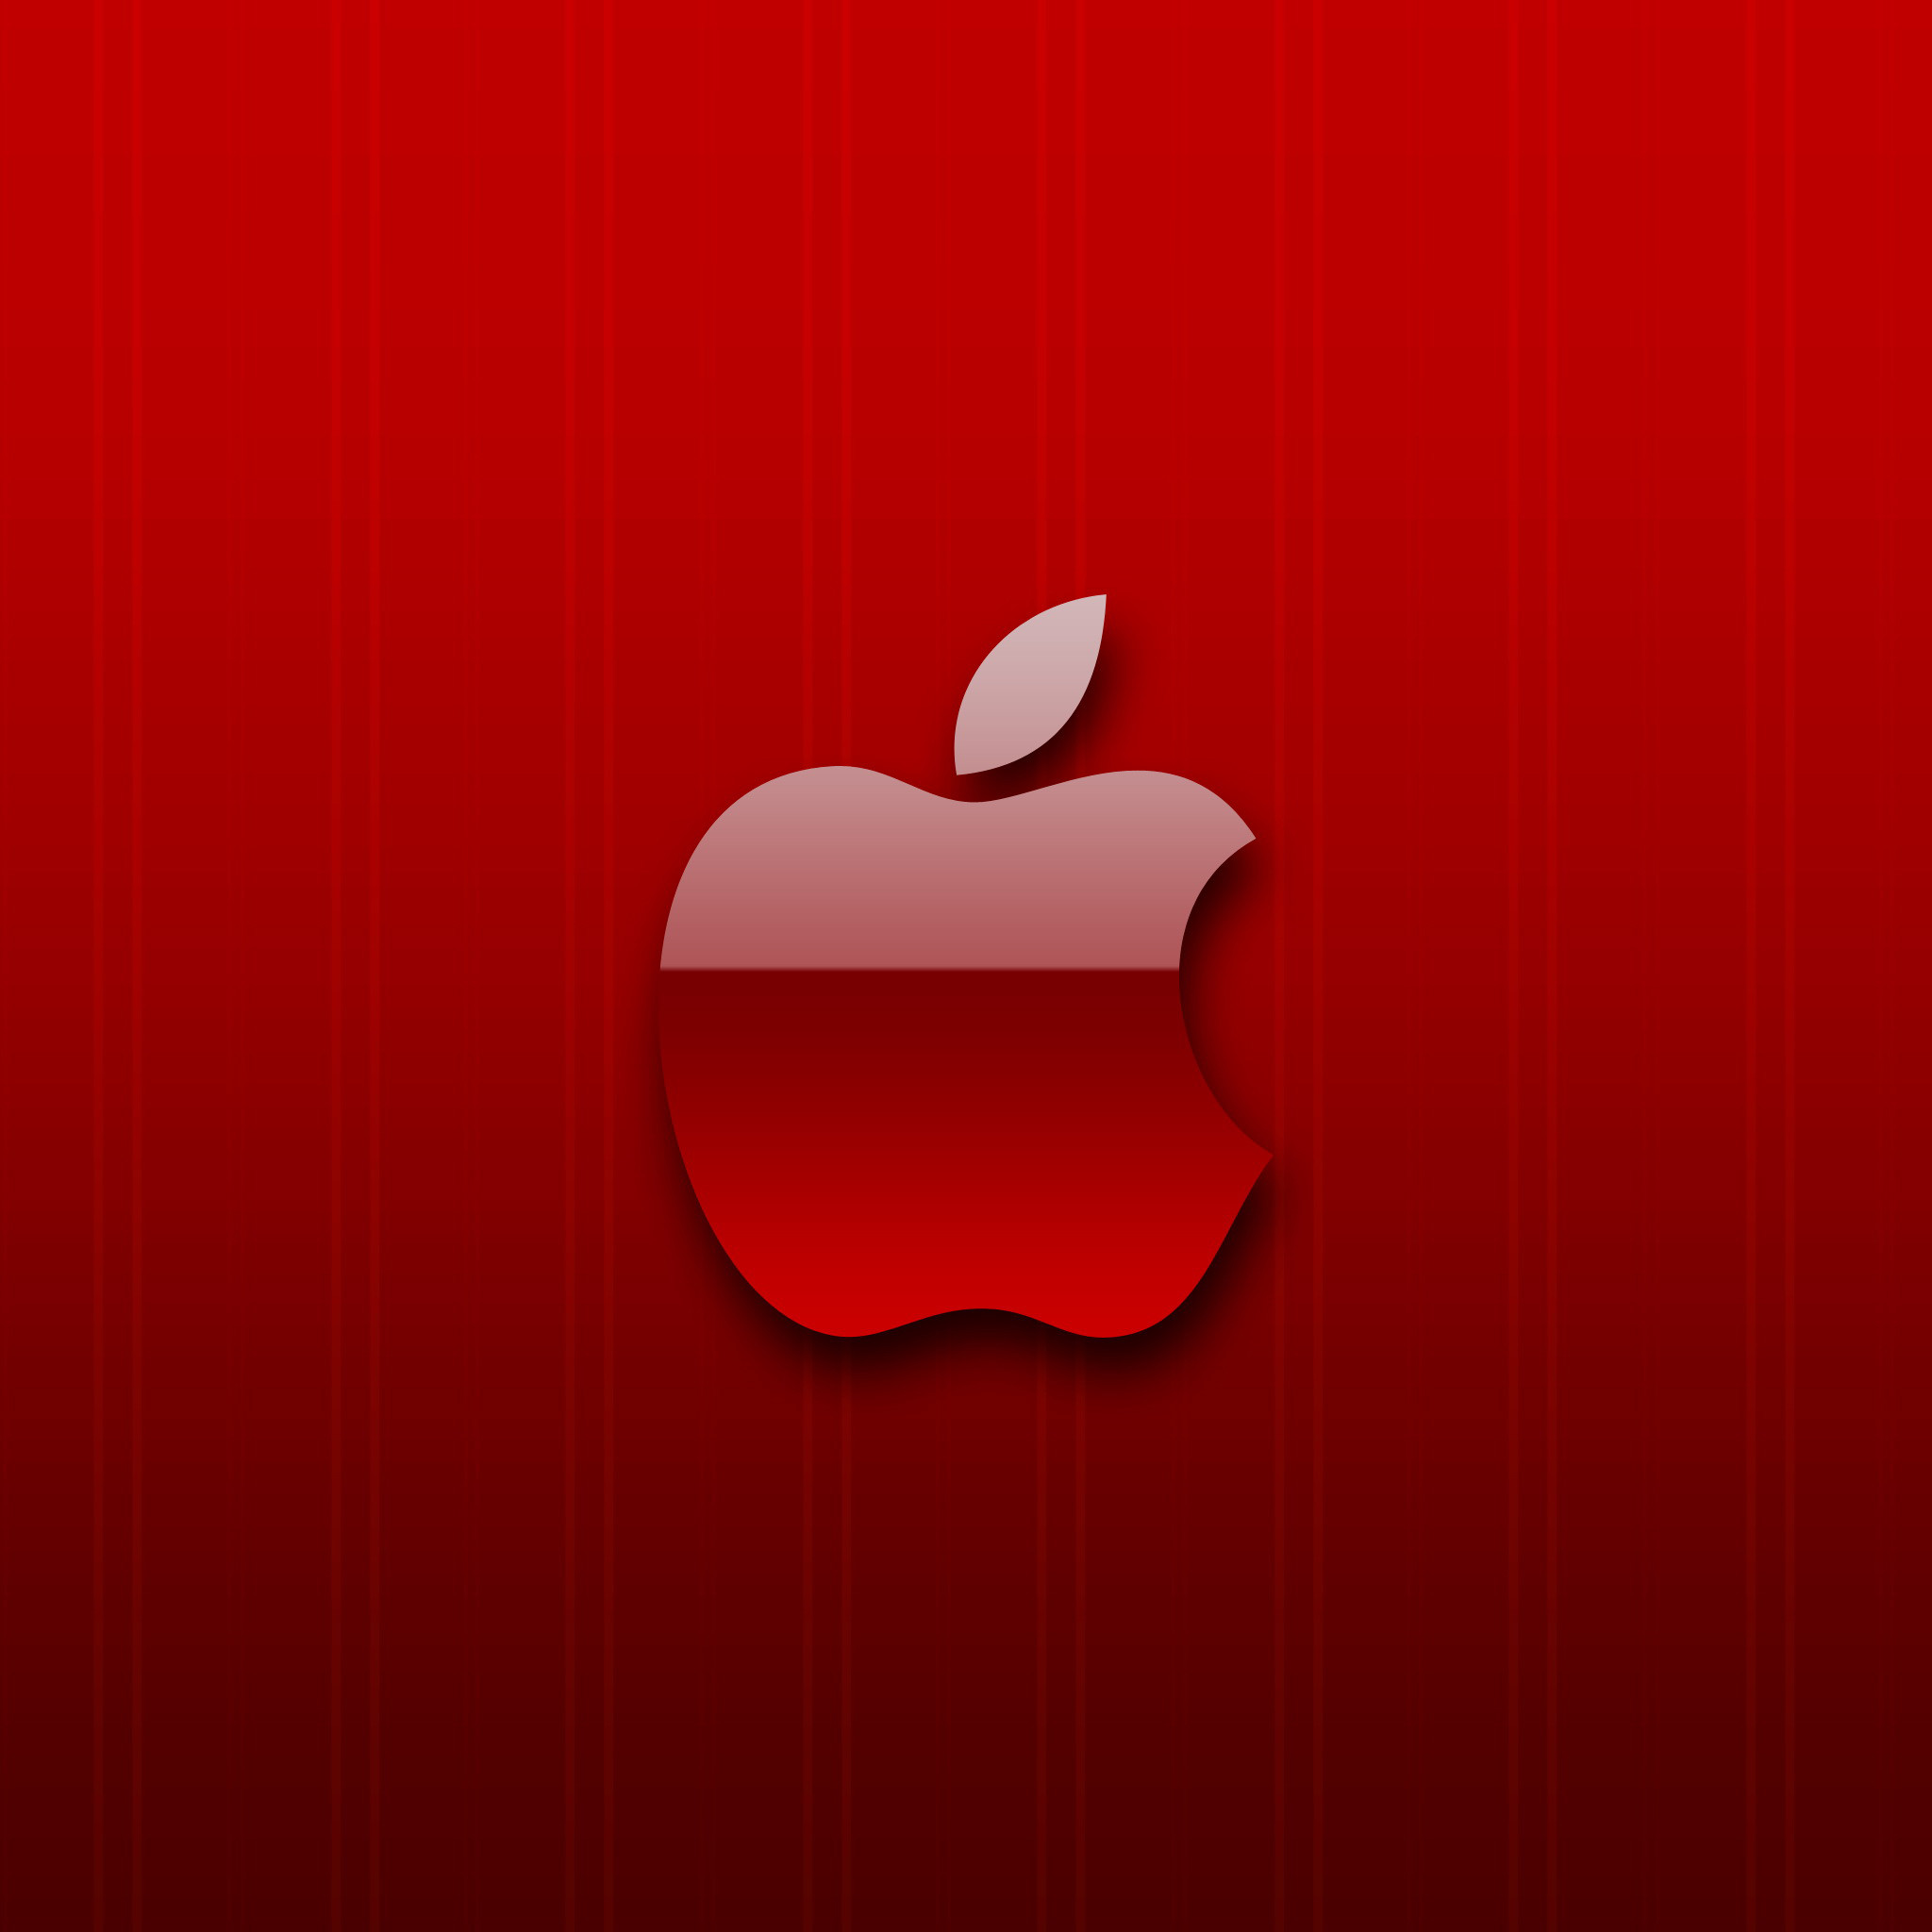 2048x2048 Red-Apple-3Wallpapers-iPad-Retina